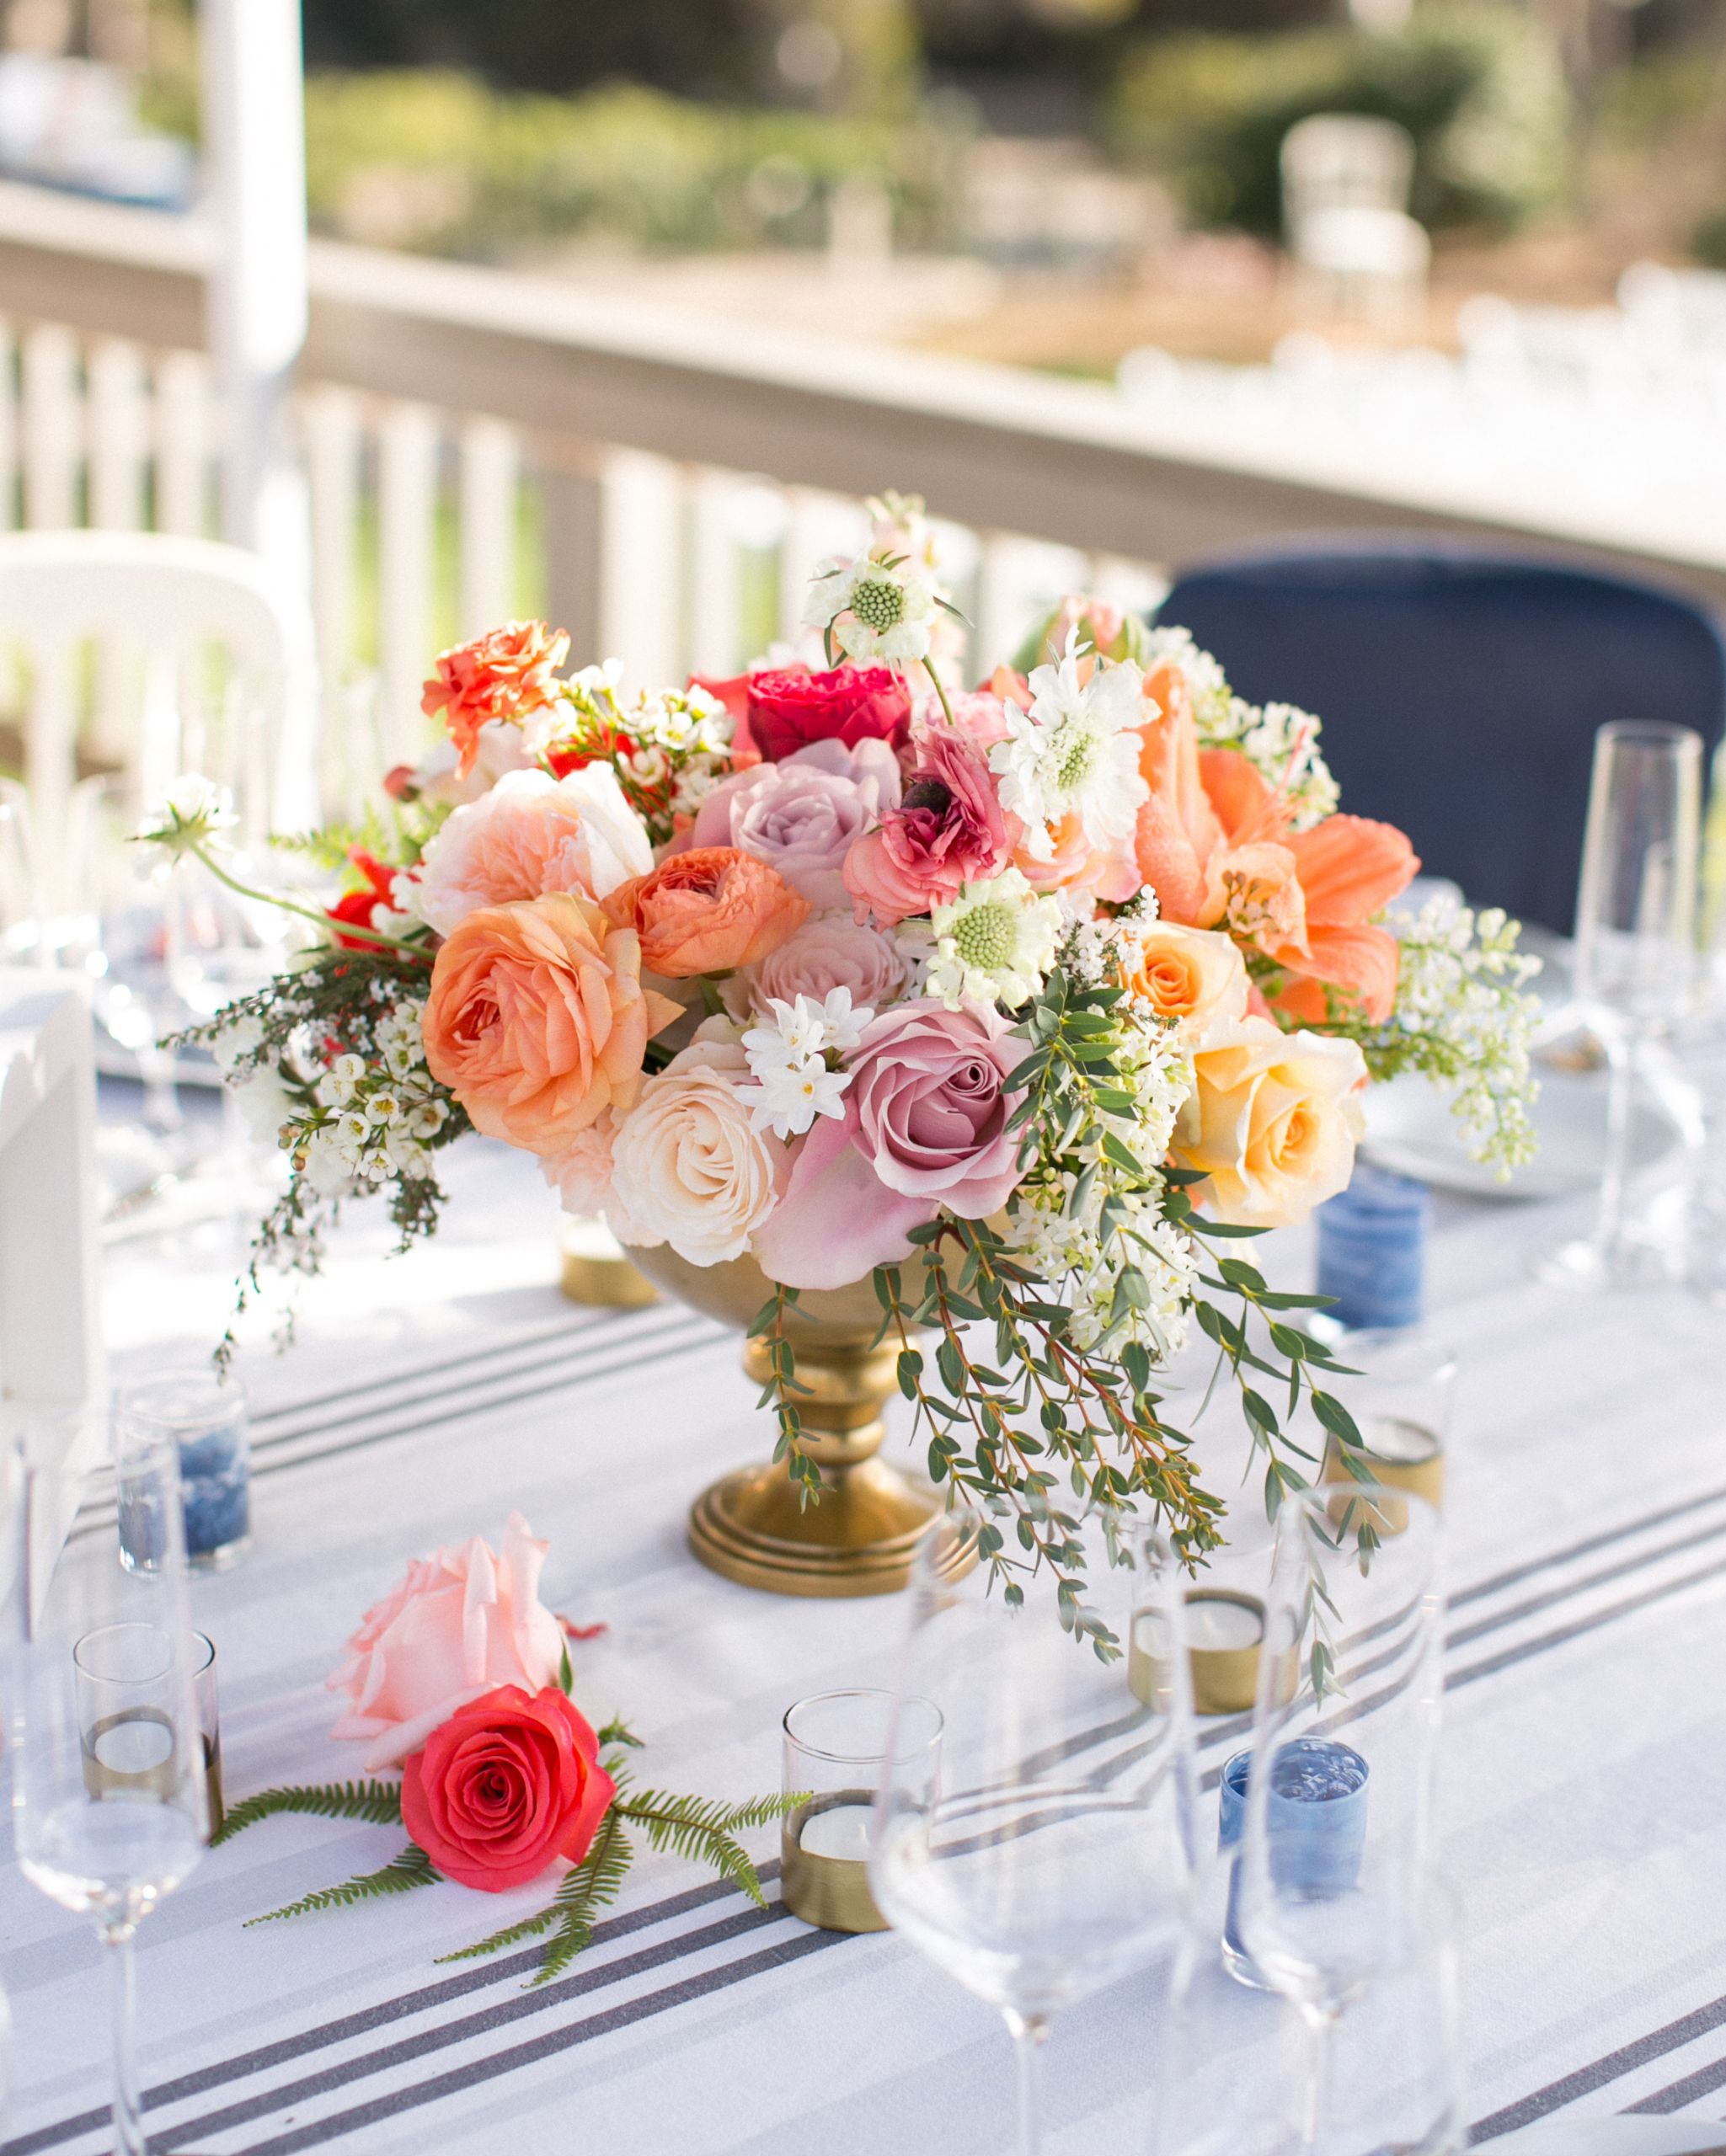 Wedding Table Flower Arrangements
 50 Wedding Centerpiece Ideas We Love